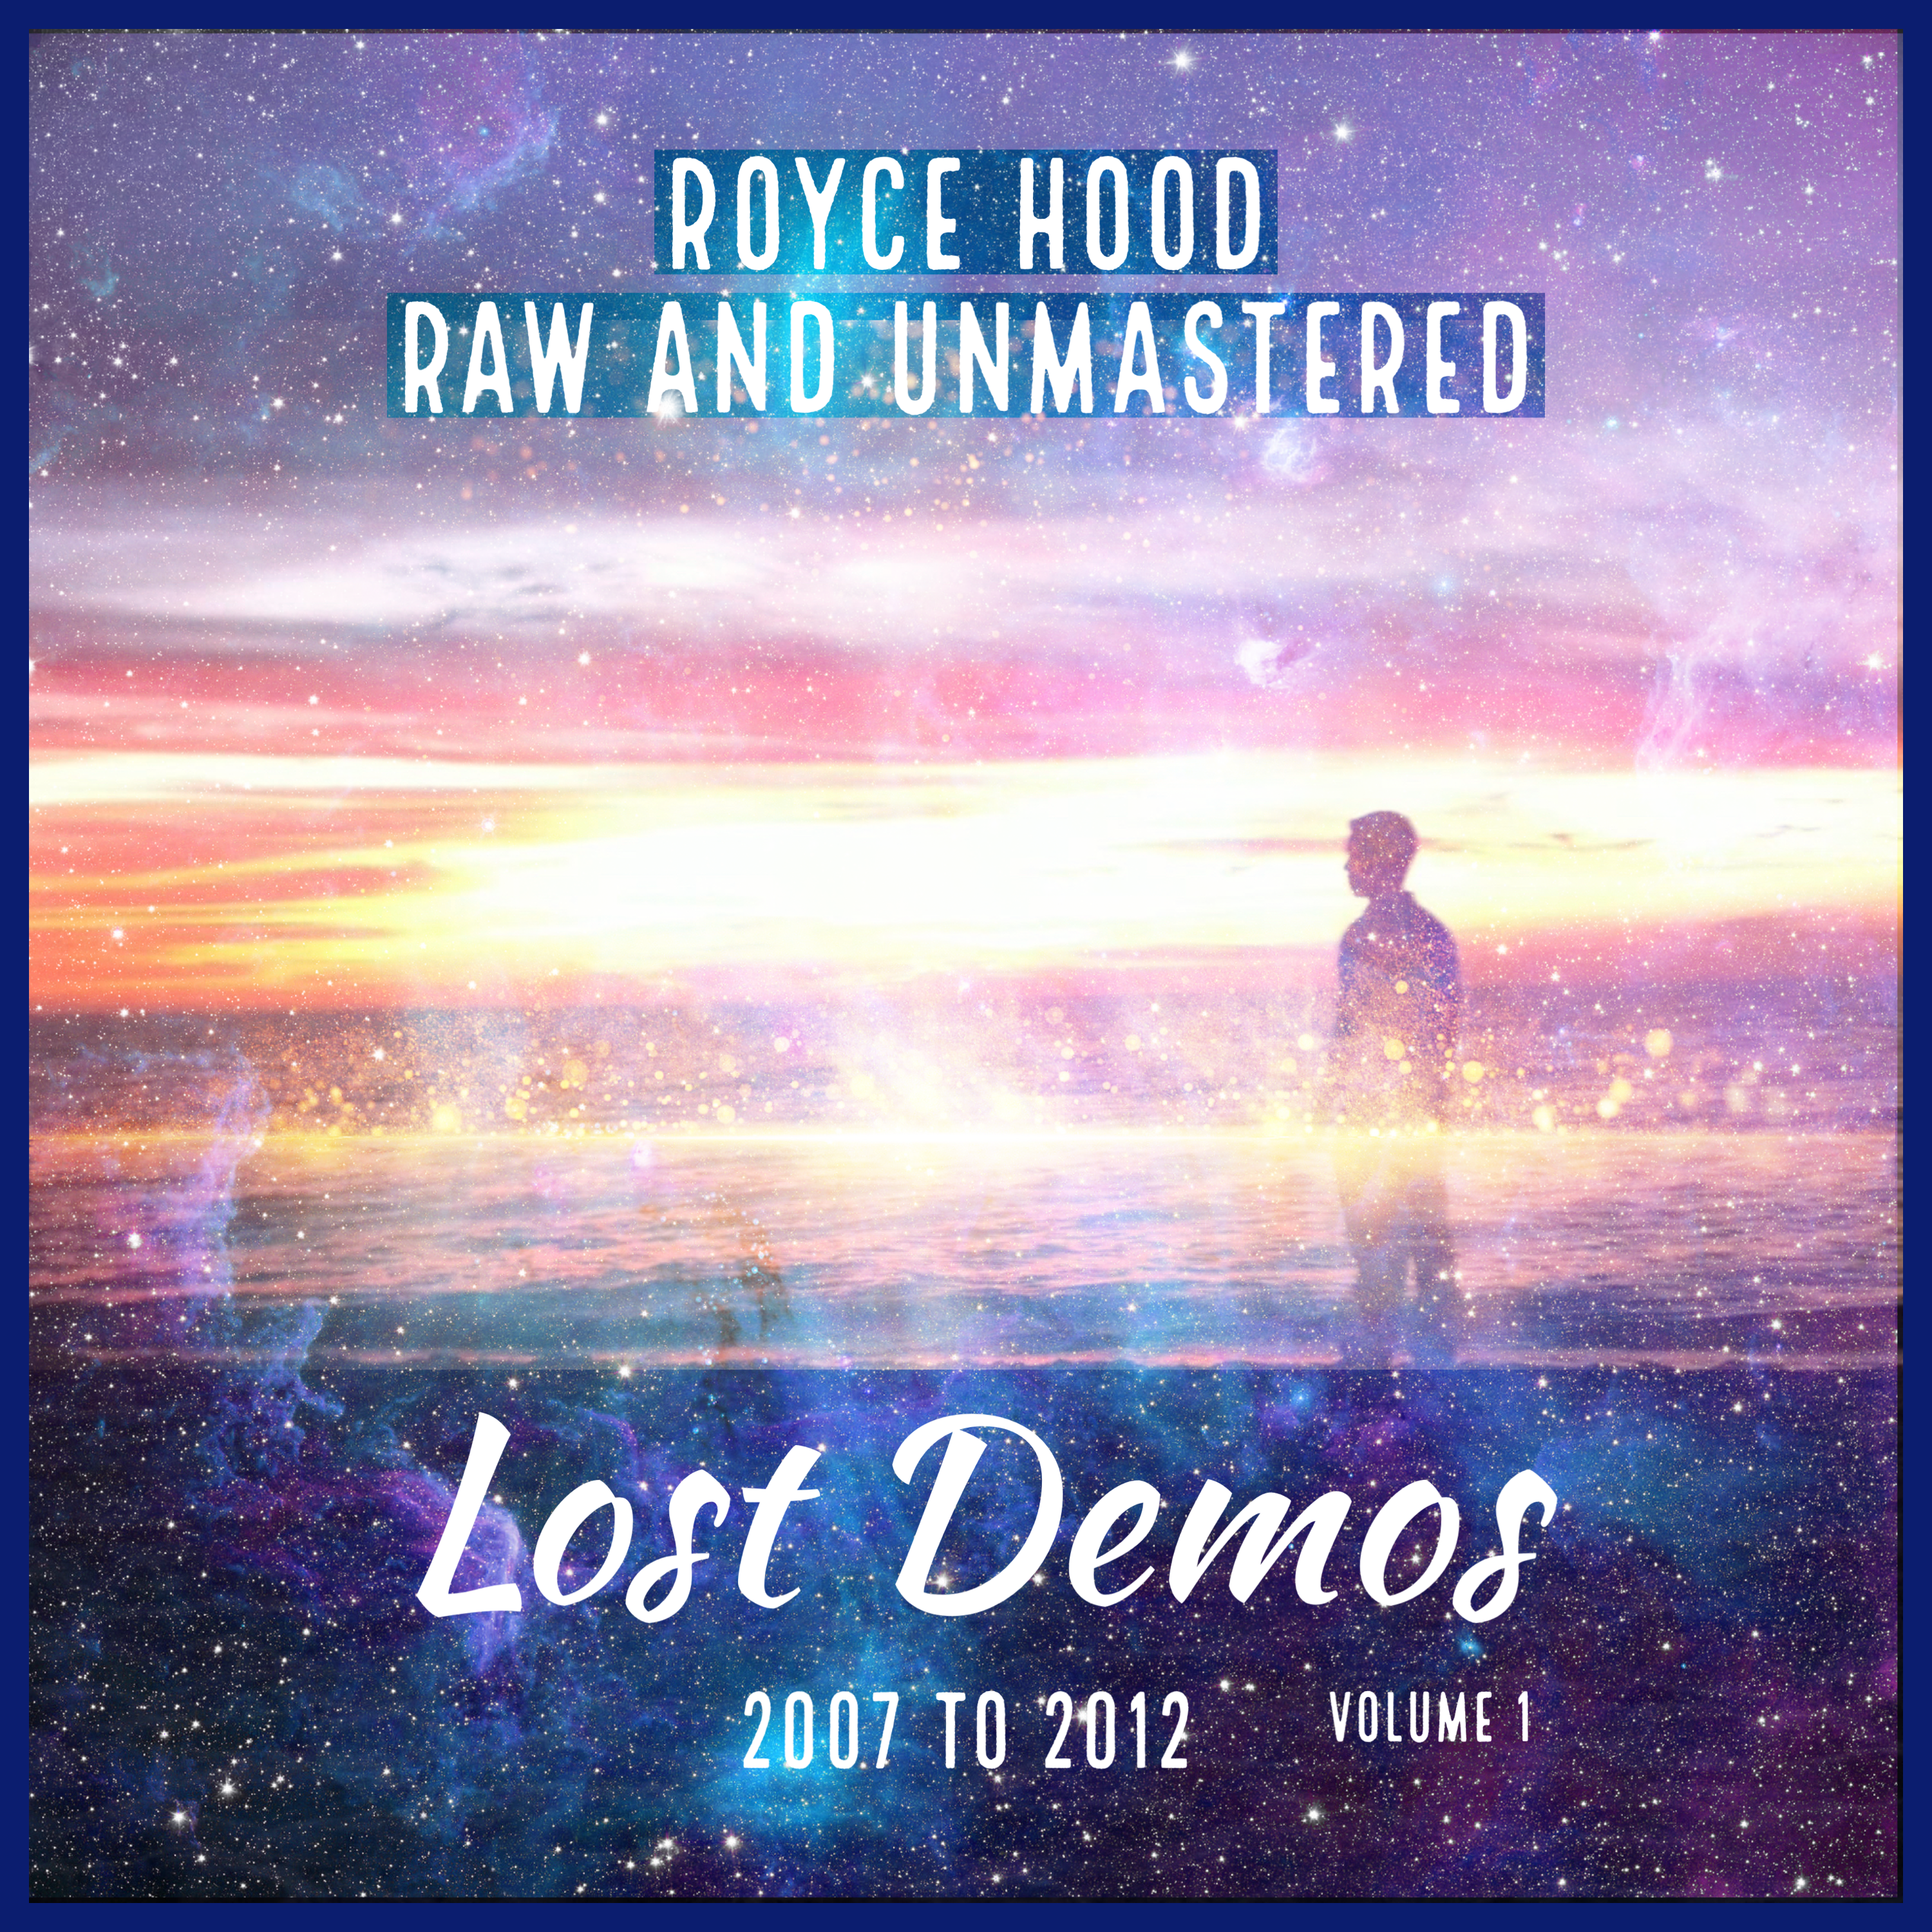 Lost Demos Vol. 1 – Raw & Unmastered Tracks